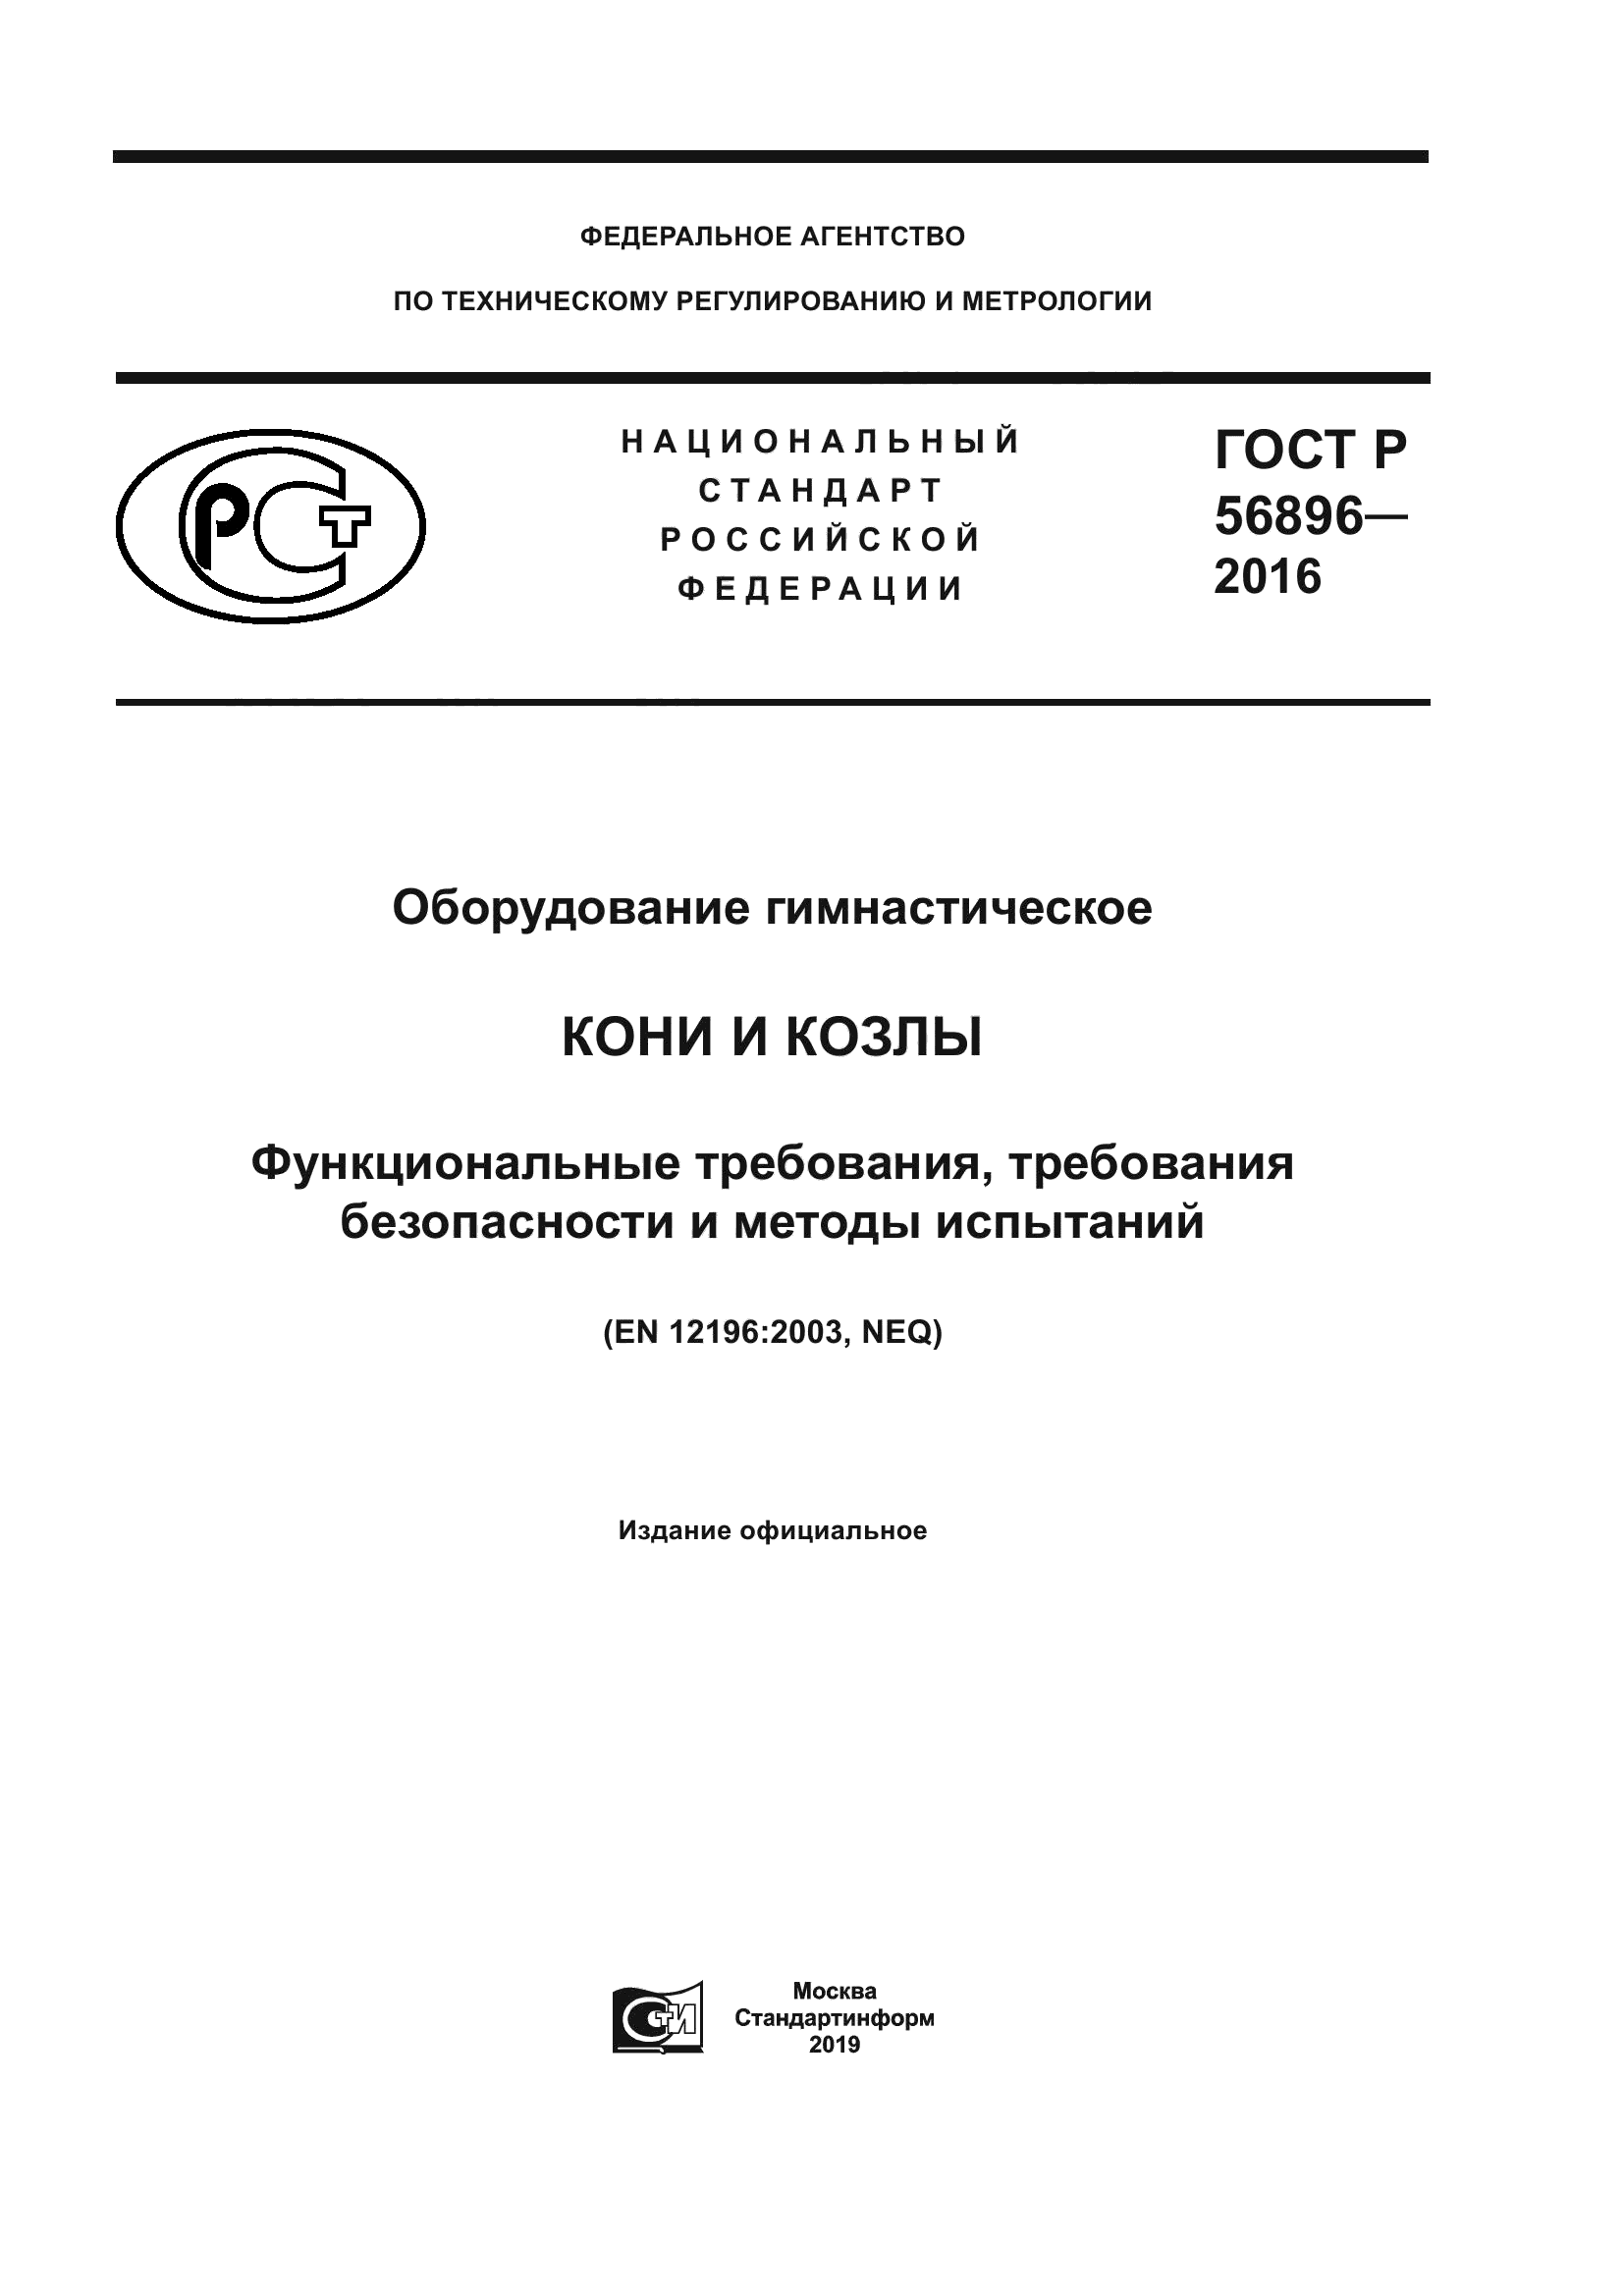 ГОСТ Р 56896-2016